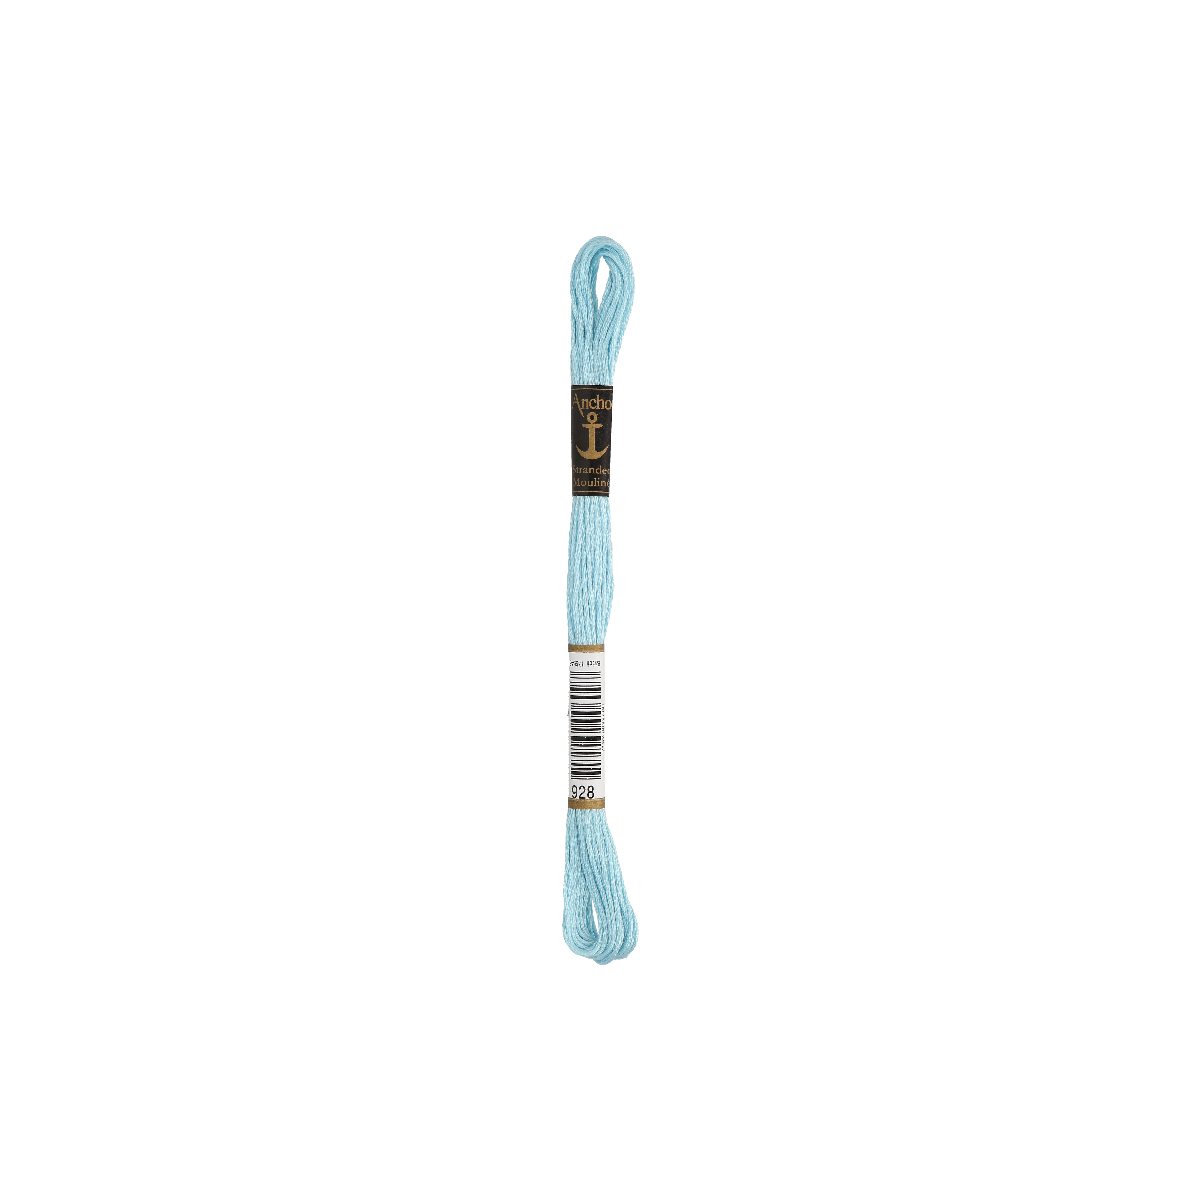 Anchor Sticktwist 8m, blu ghiacciaio, cotone, colore 928,...